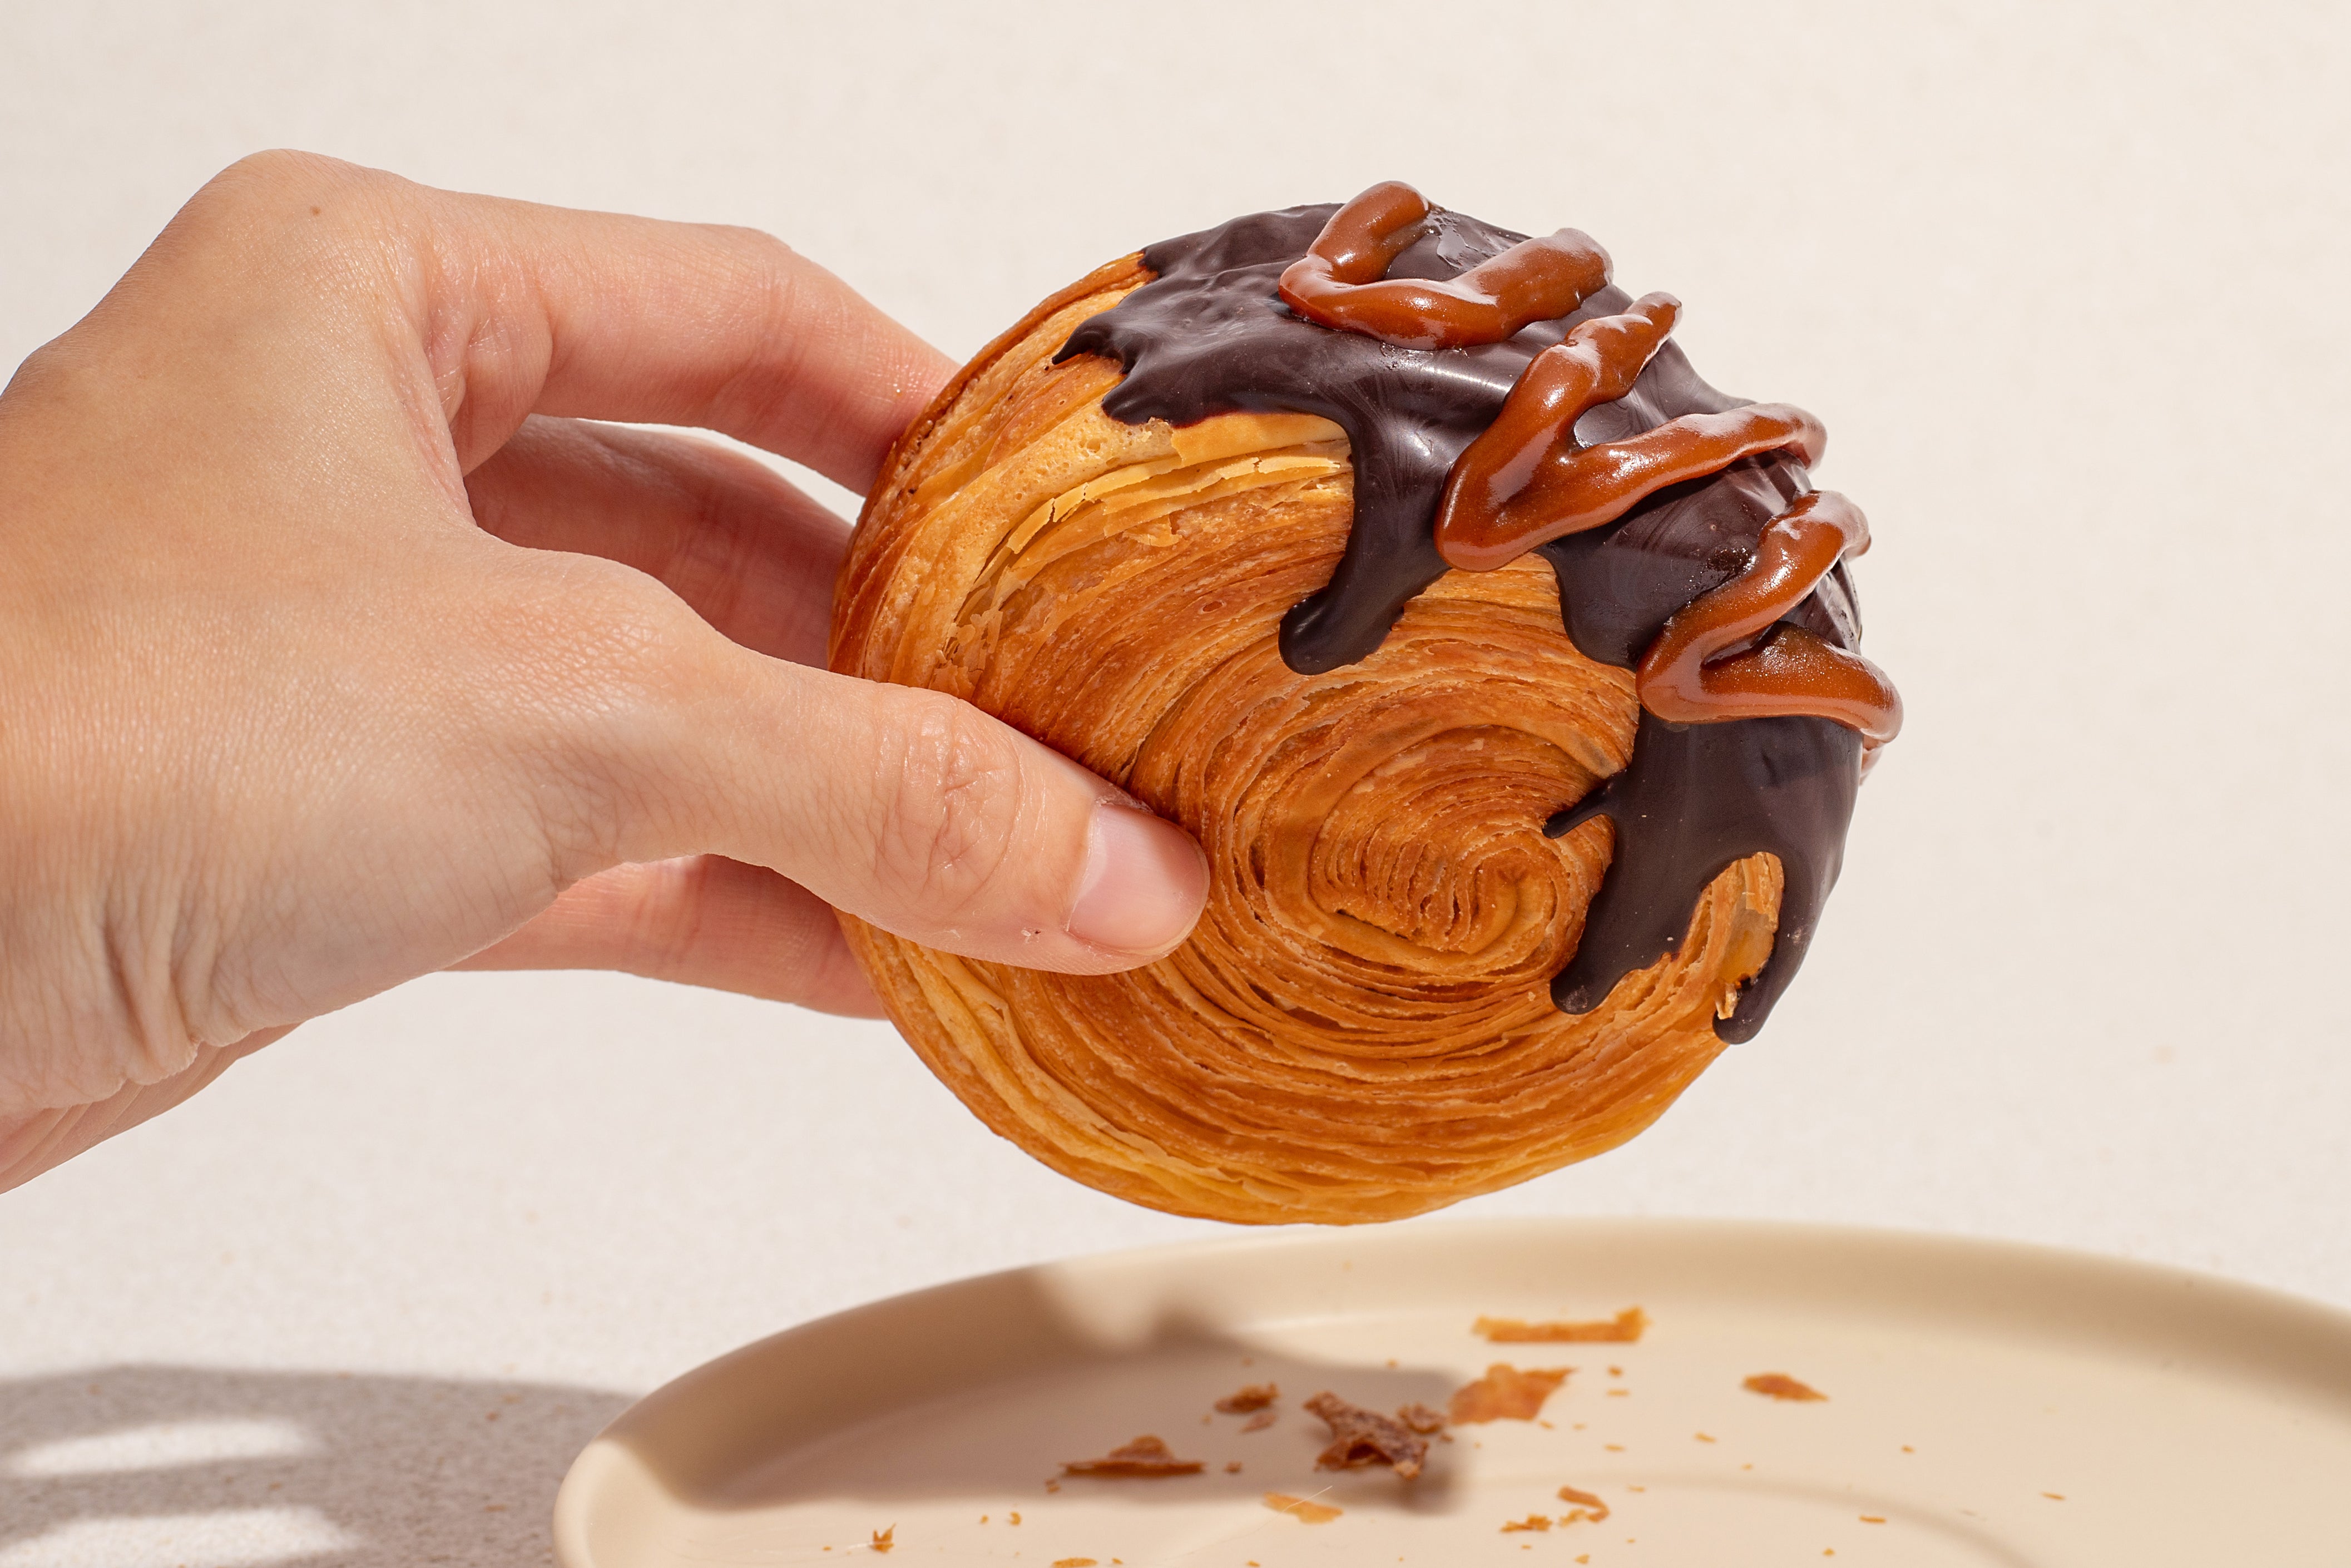 Choco Caramel Round Croissant